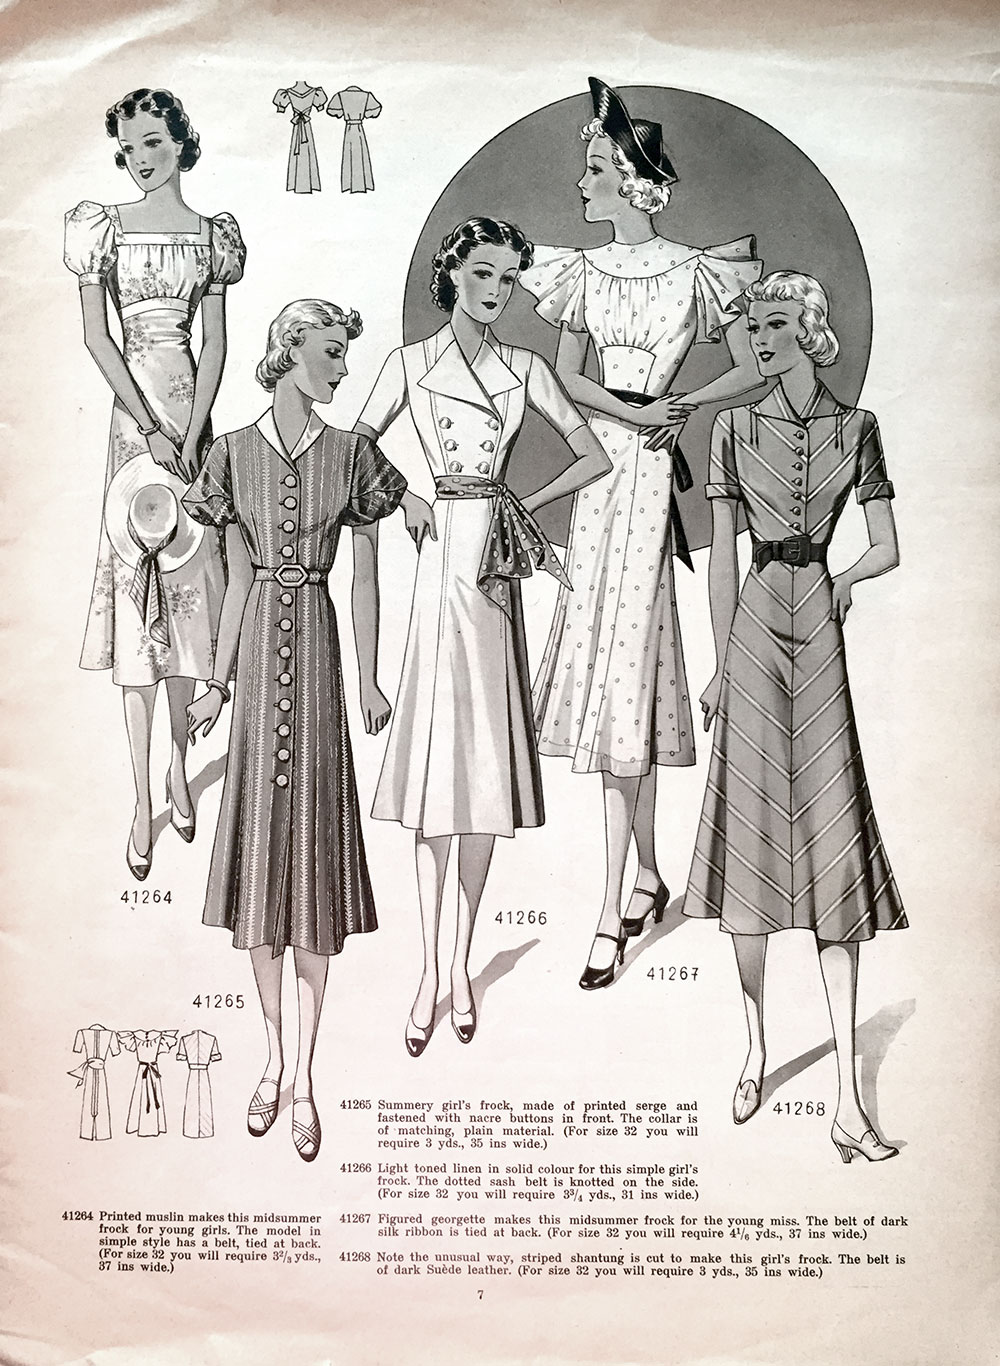 1938 day dresses